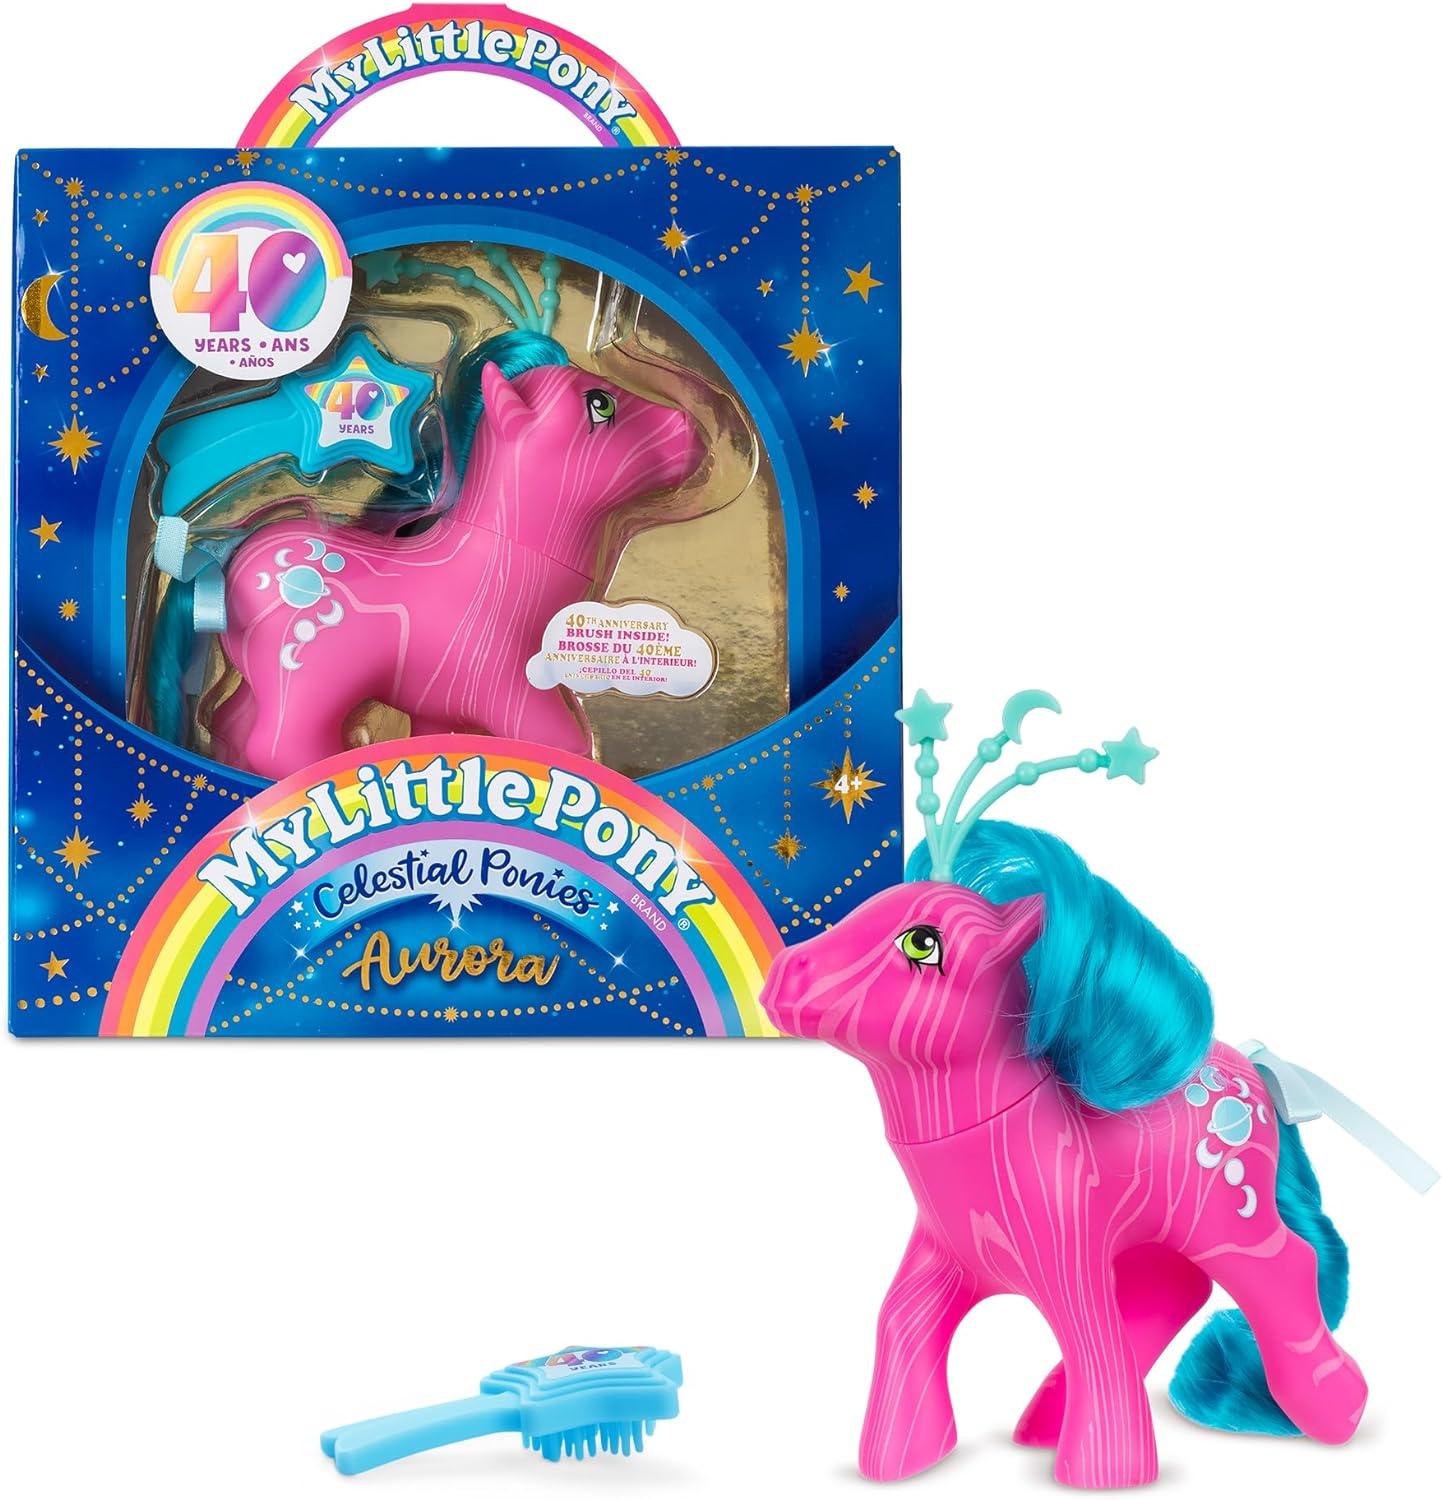 My Little Pony Celestial Ponies AURORA 40th Anniversary Pink Pony Figure